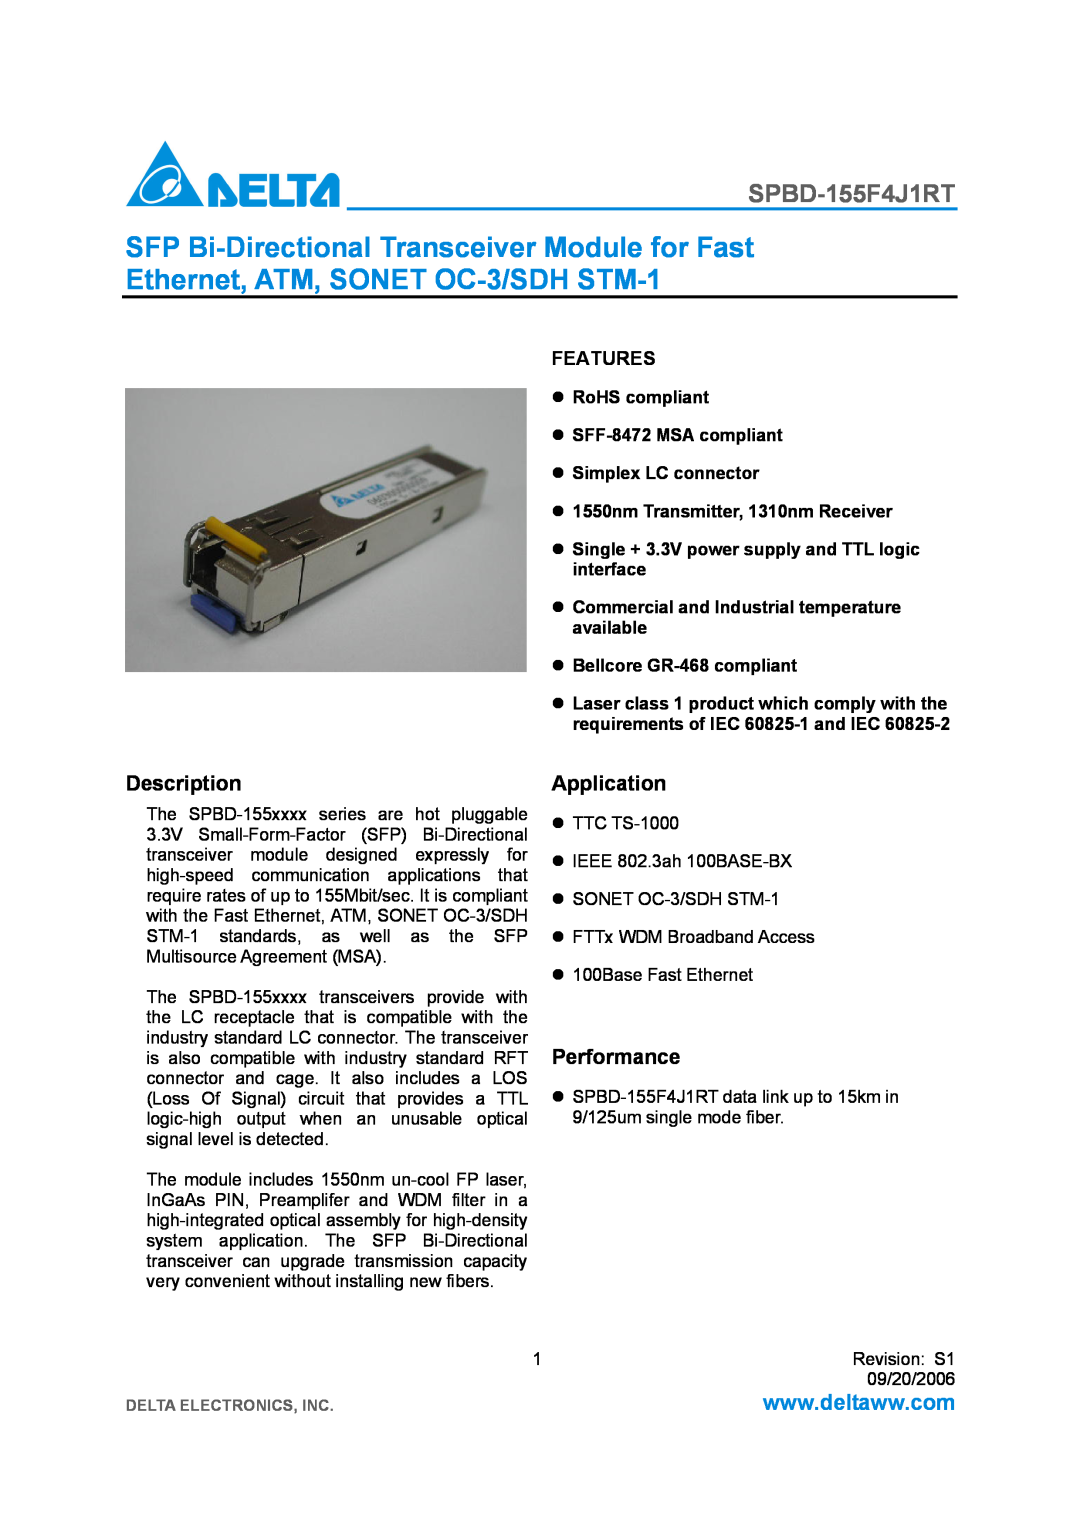 Delta Electronics SPBD-155F4J1RT manual Description, Application, Performance, 1550nm Transmitter, 1310nm Receiver 